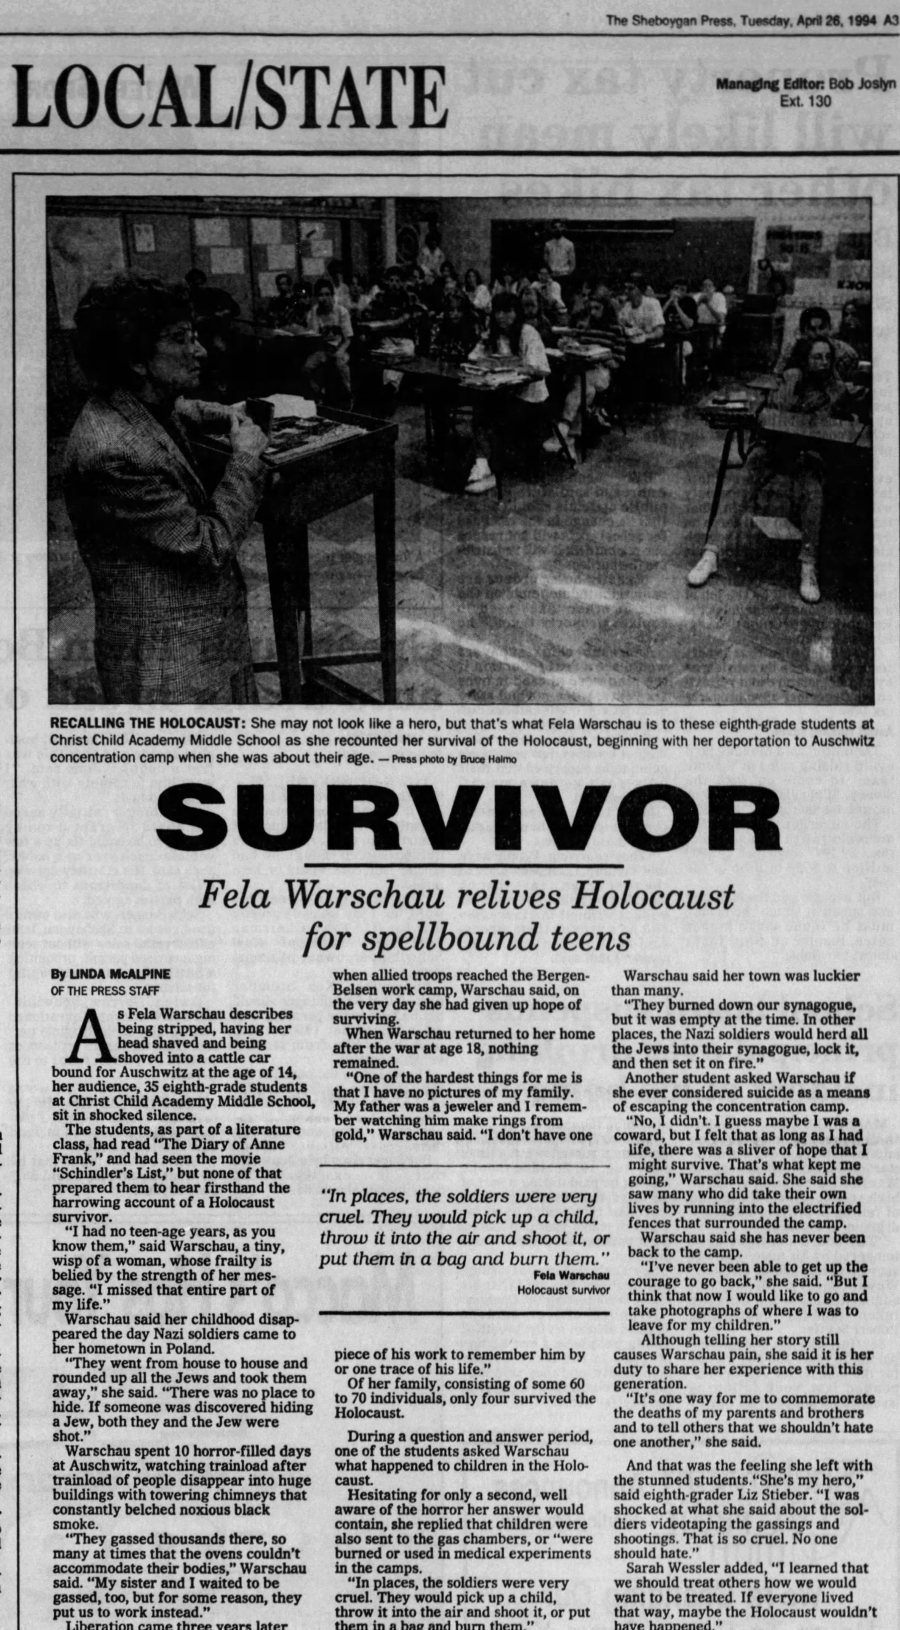 Fela Warschau Relives Holocaust for Spellbound Teens and photo of Fela Warschau